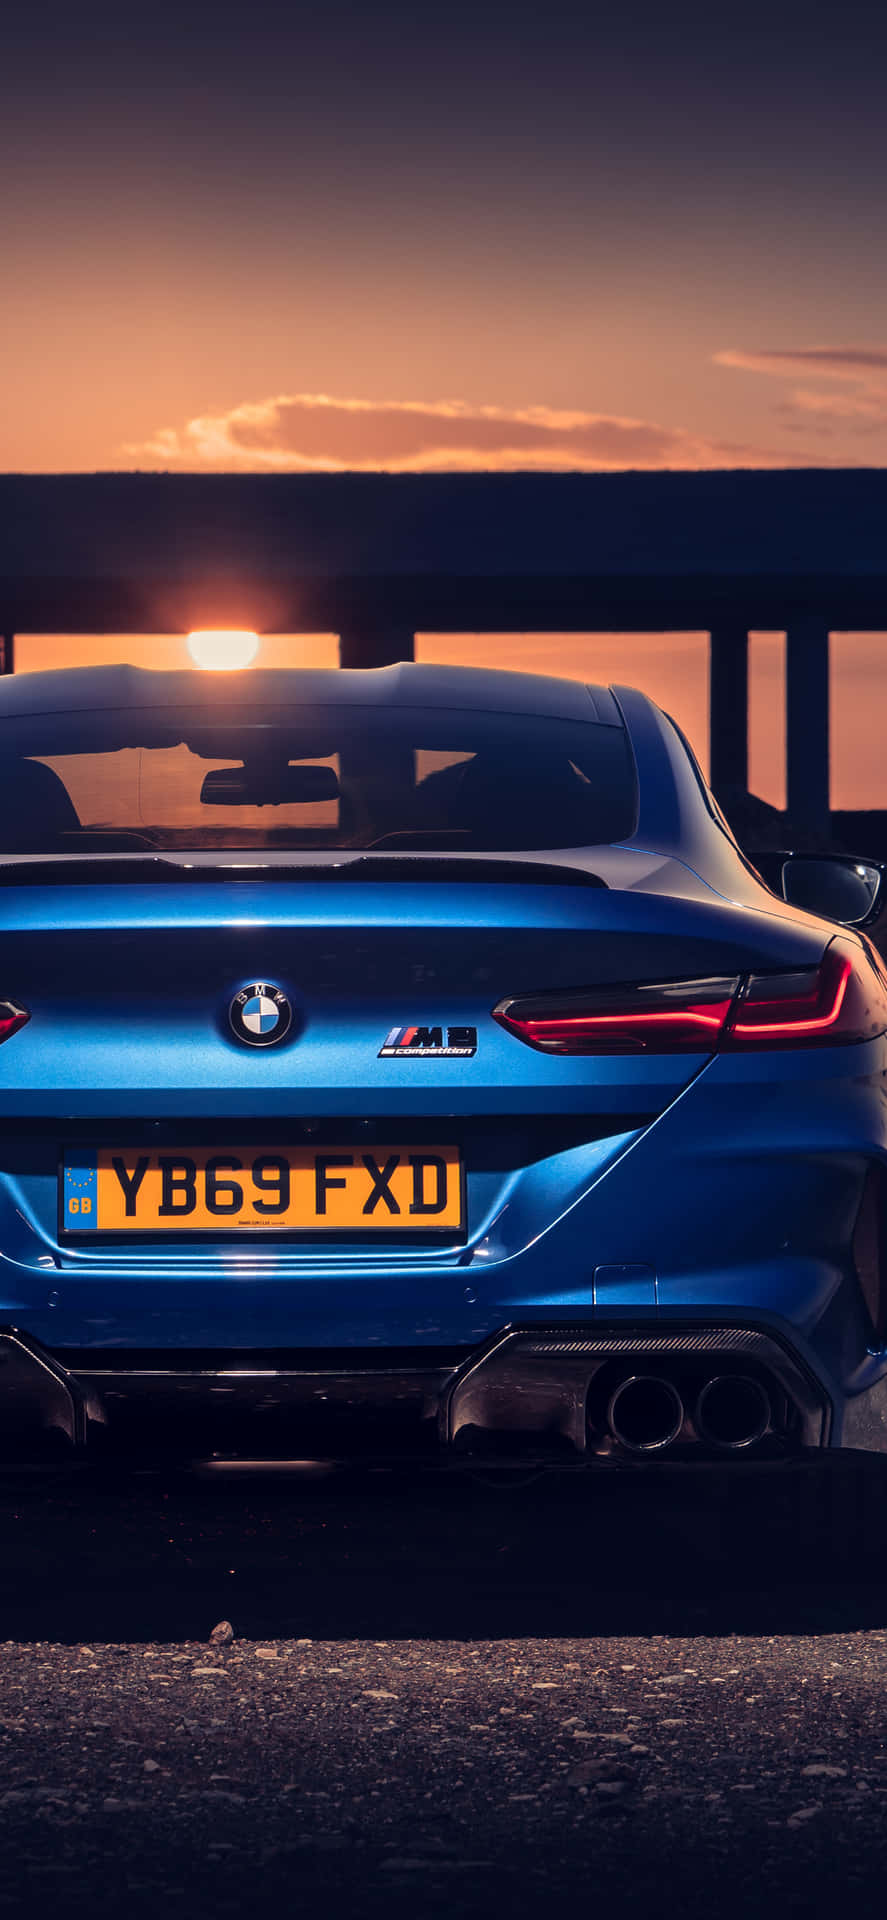 BMW Tablet Metallic Blue M8 Wallpaper